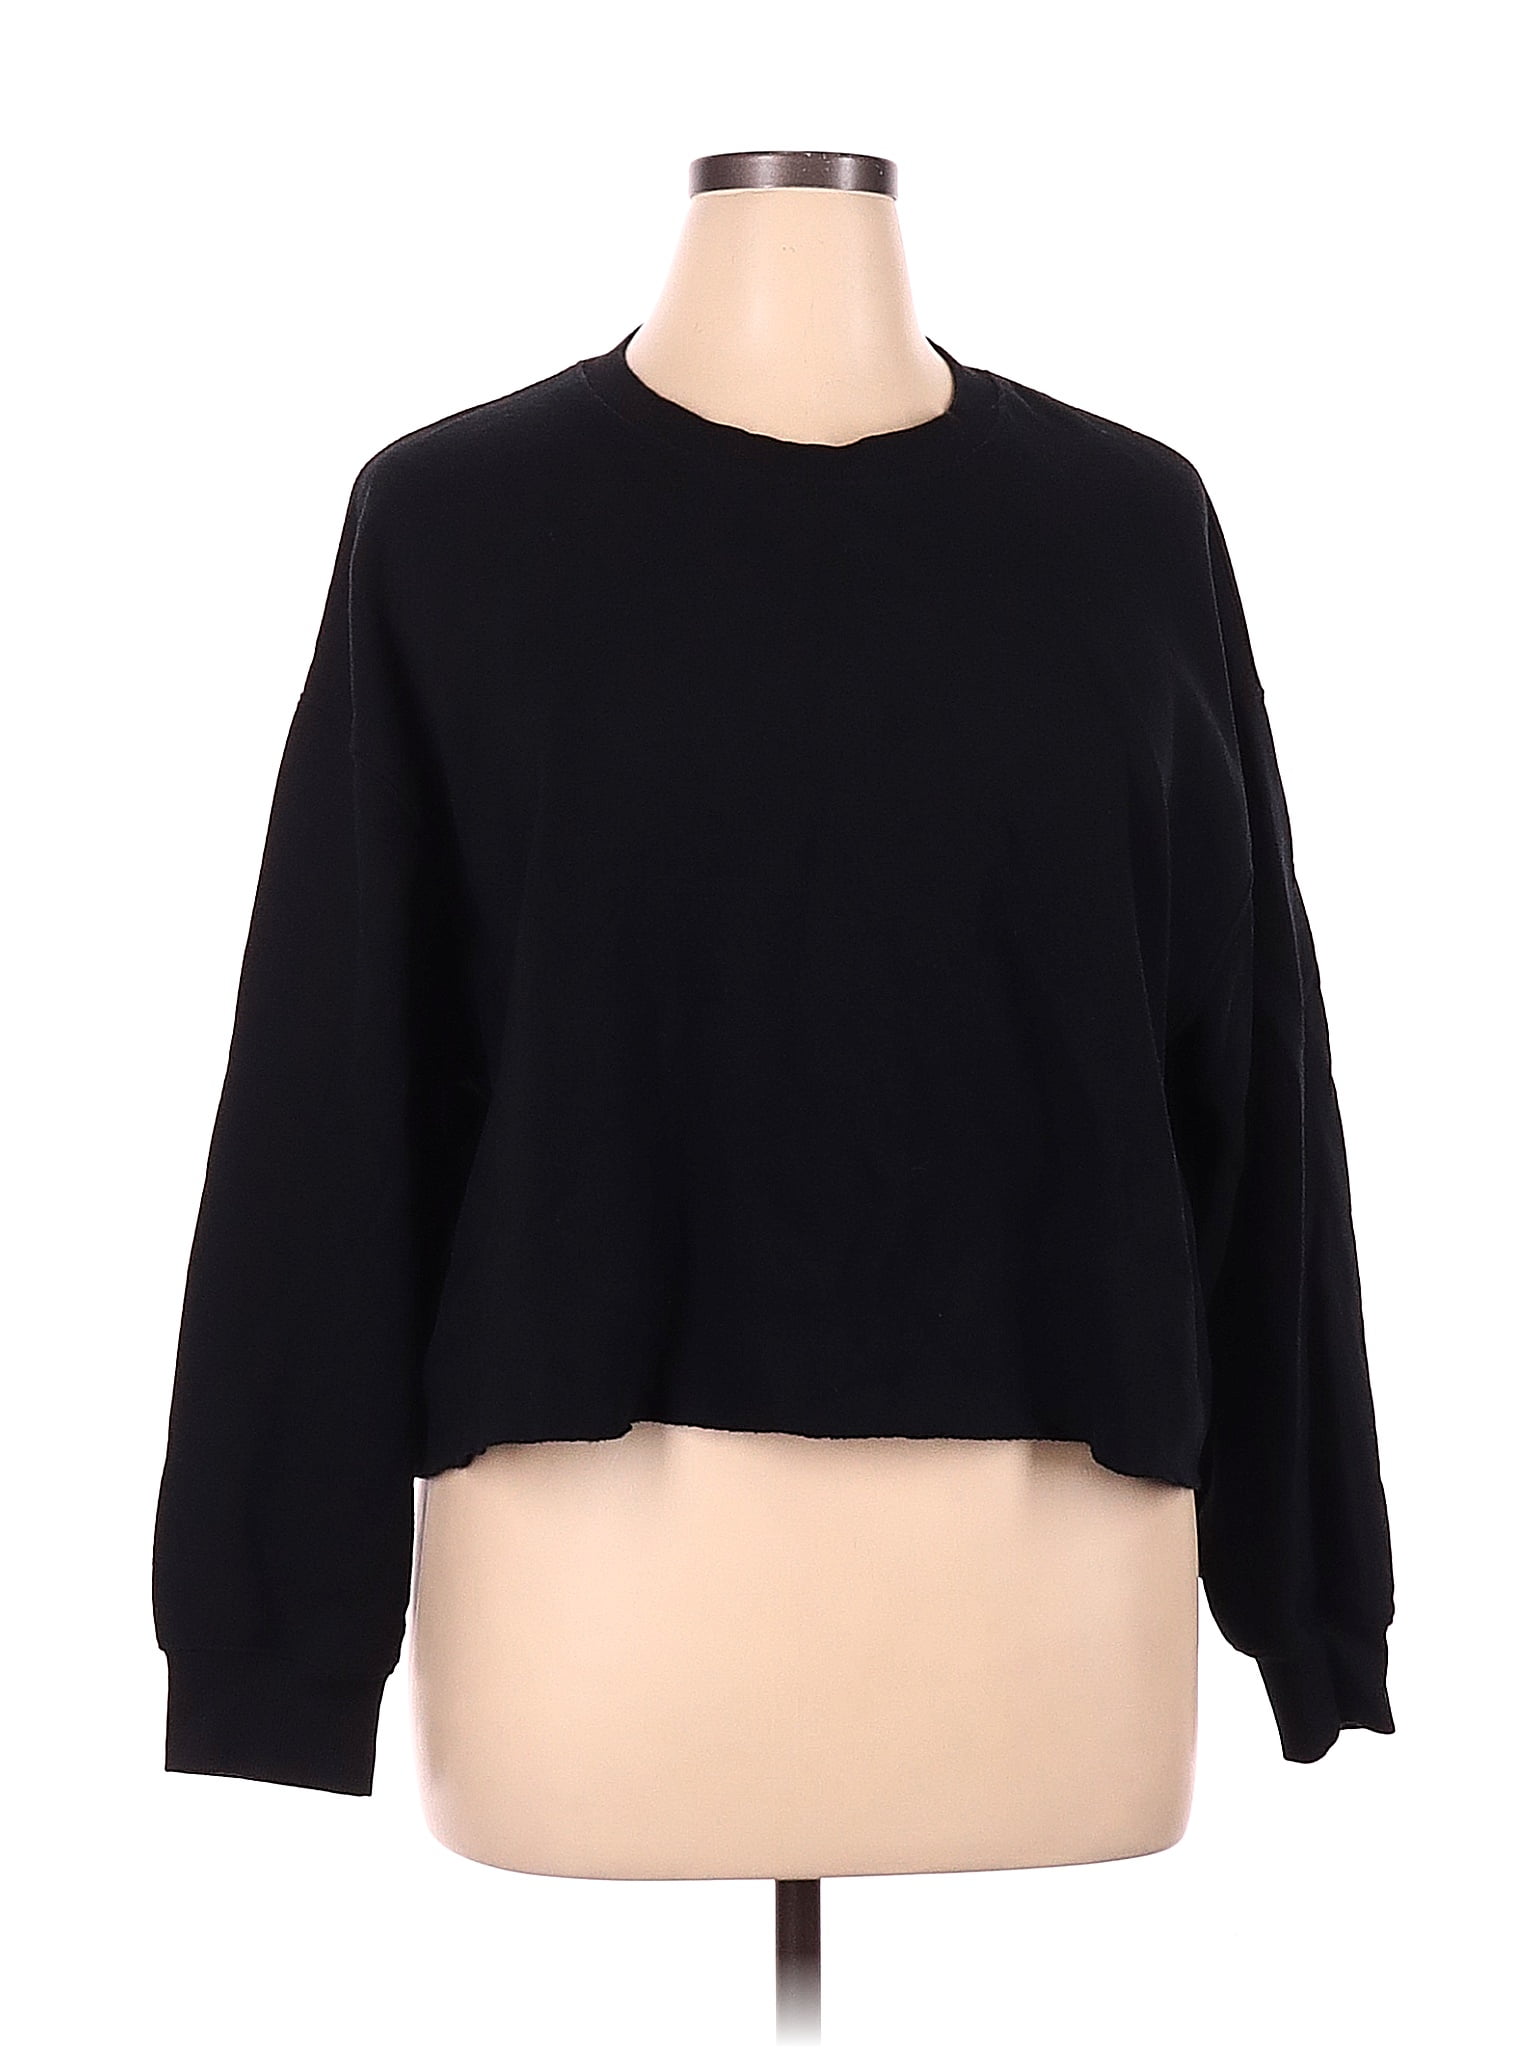 Wild Fable Solid Black Sweatshirt Size 1X (Plus) - 50% off